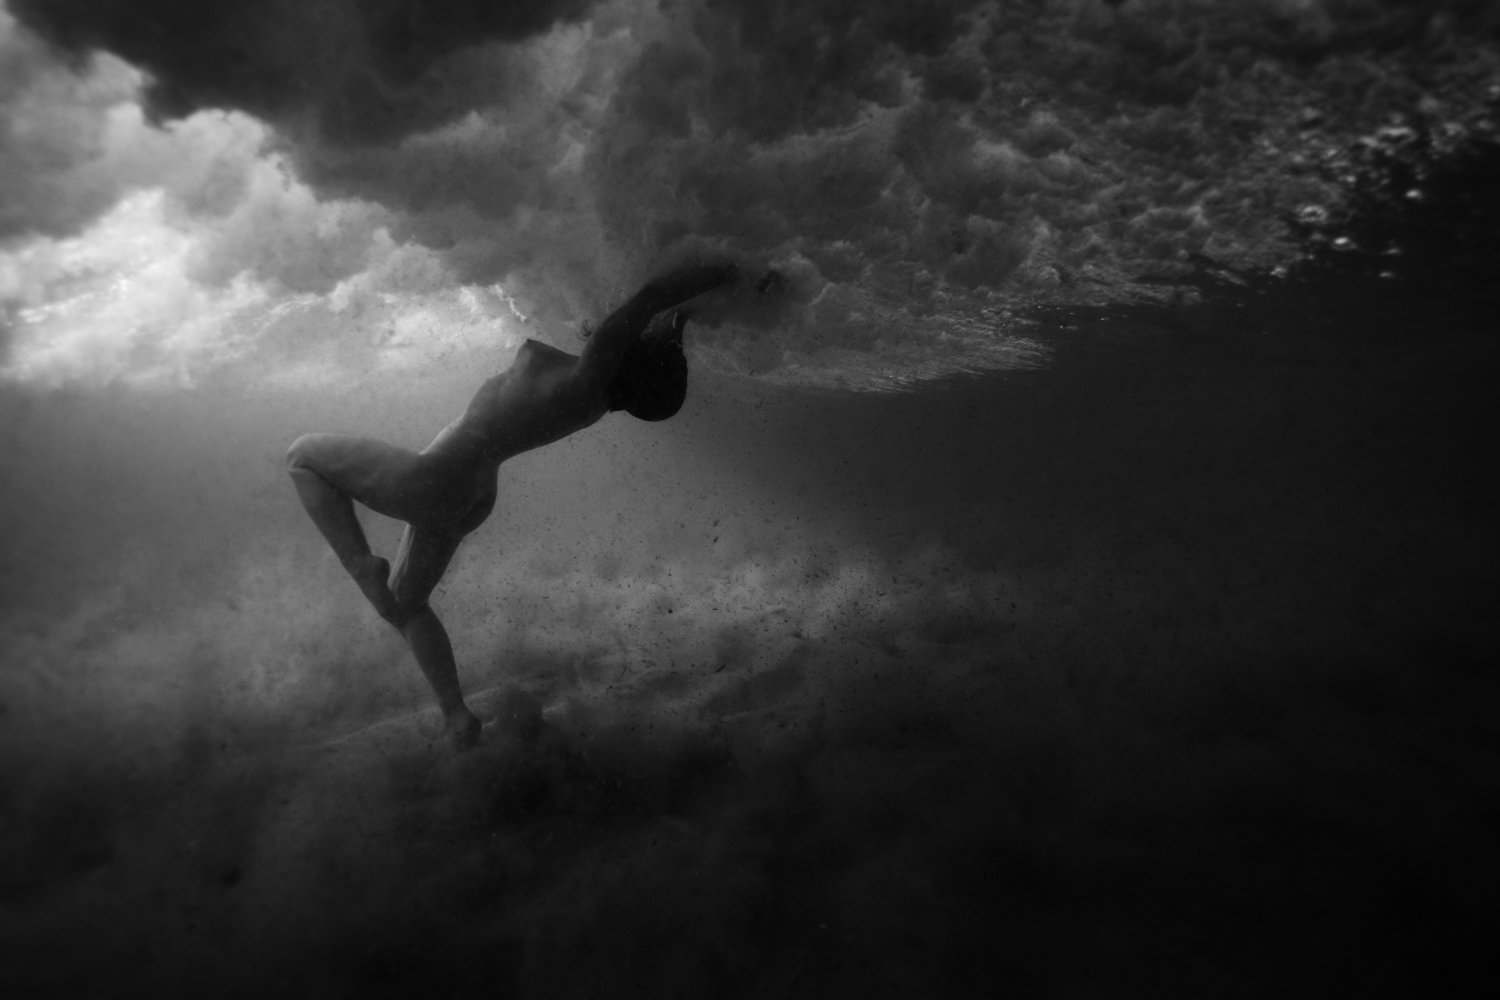 underwater corse corsica sea mediterranean island france french photographer photographe ajaccio Krista Espino Capo di feno wave nude nue femme woman fine art photography-66.jpg